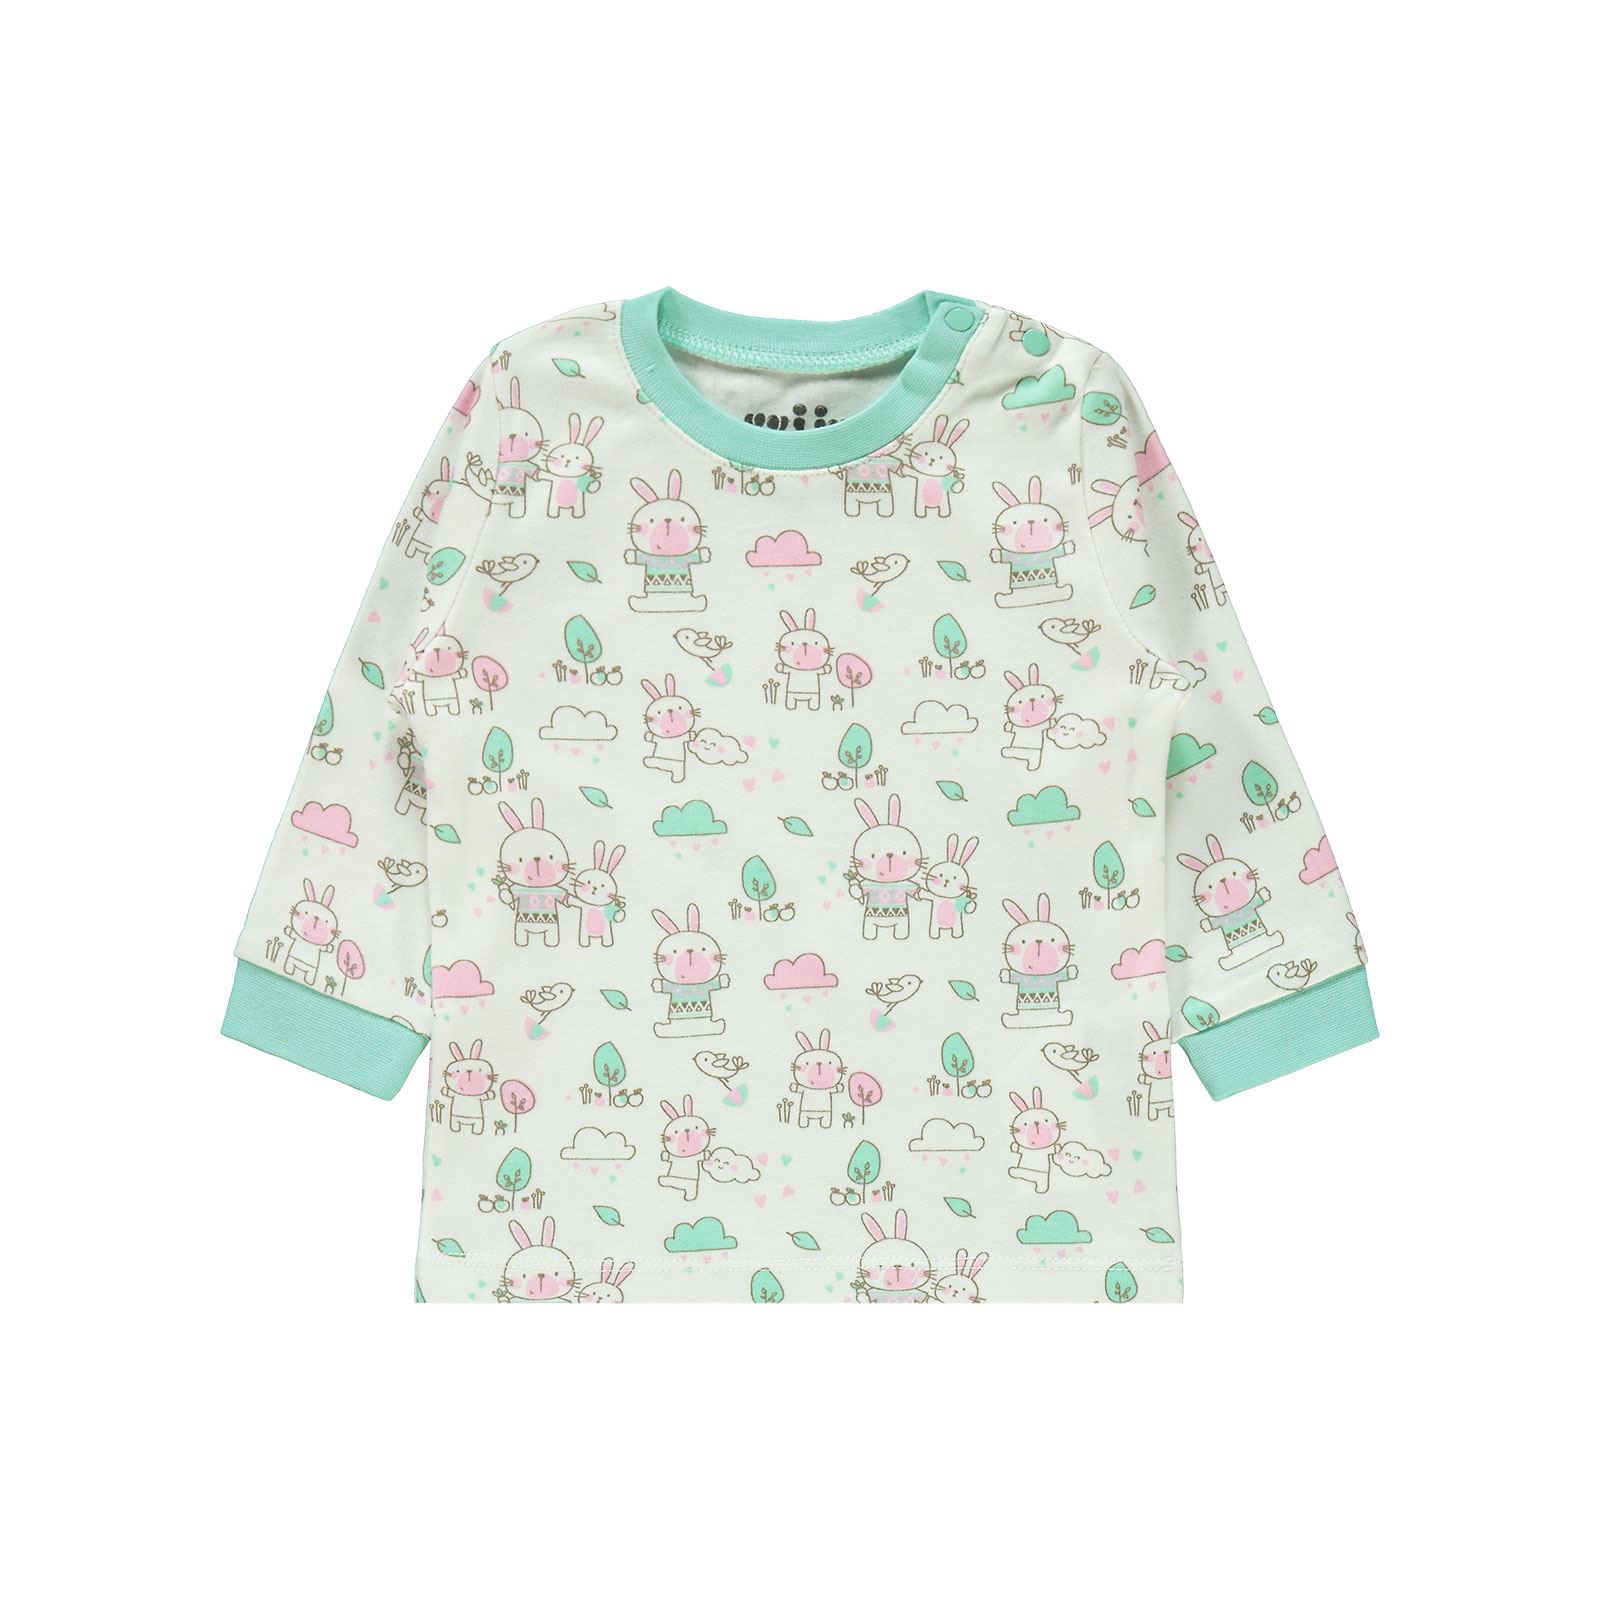 Kujju Kız Bebek Pijama Takımı 6-18 Ay Mint Yeşili